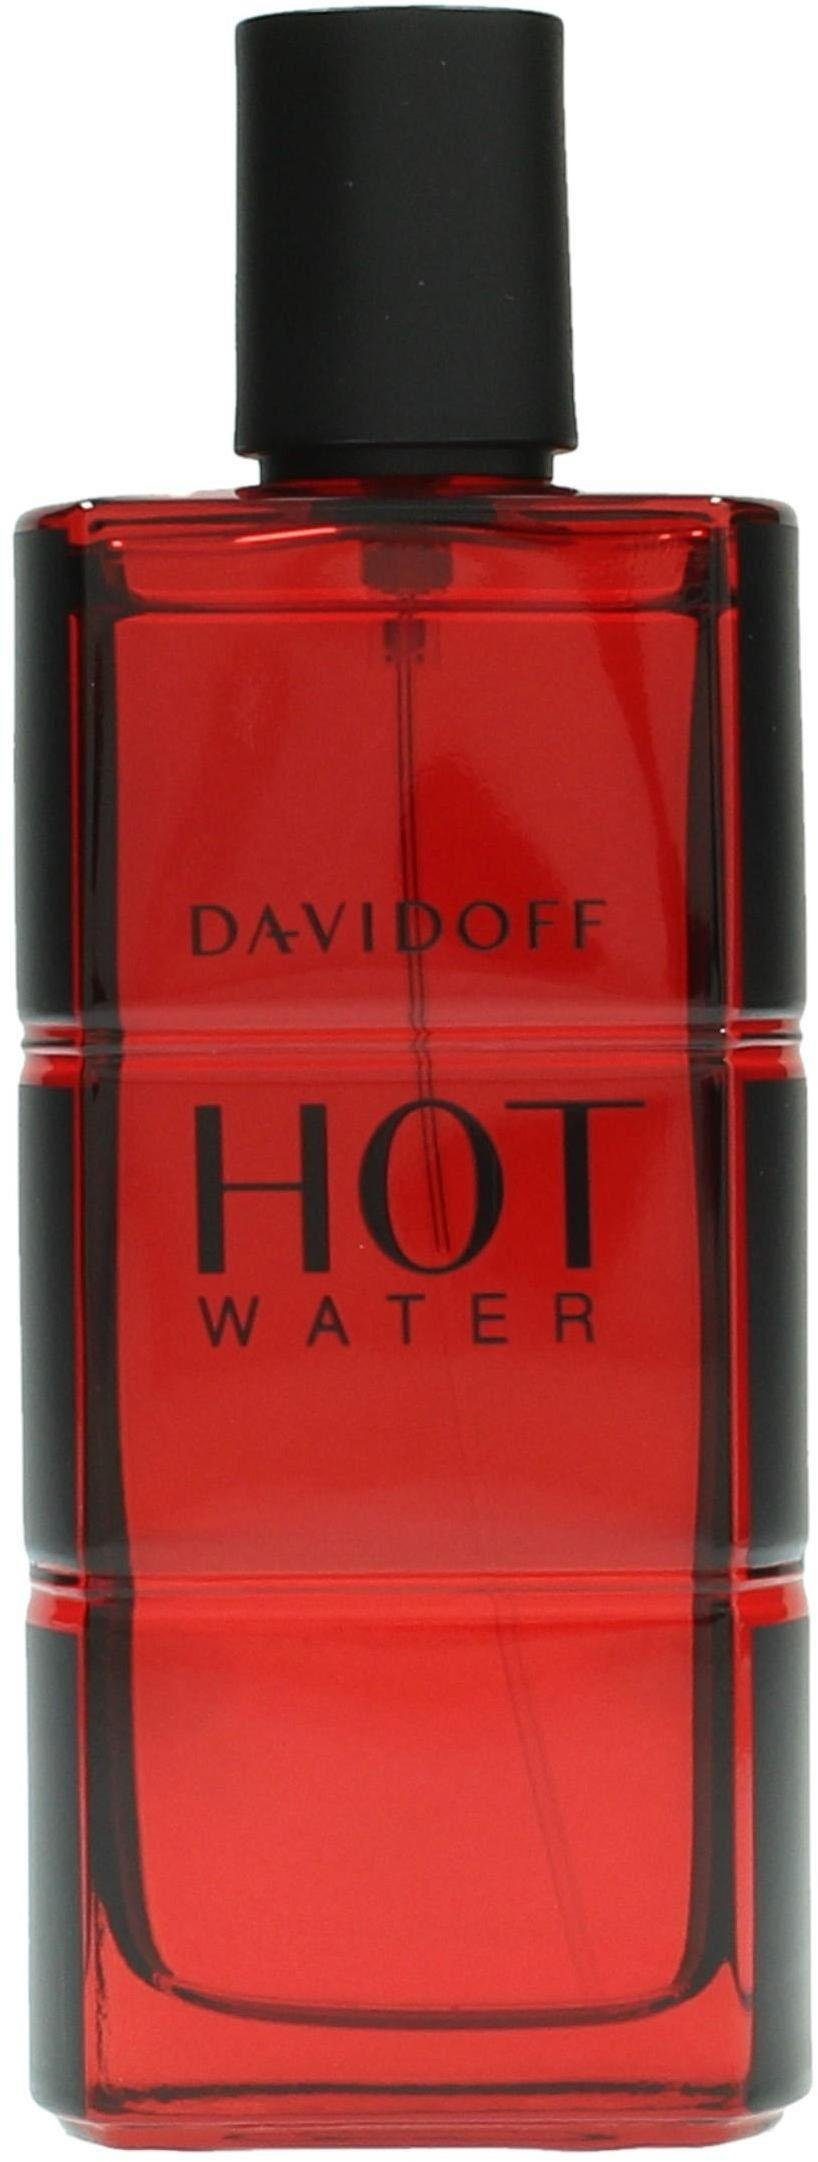 DAVIDOFF de Toilette Hot Eau Water